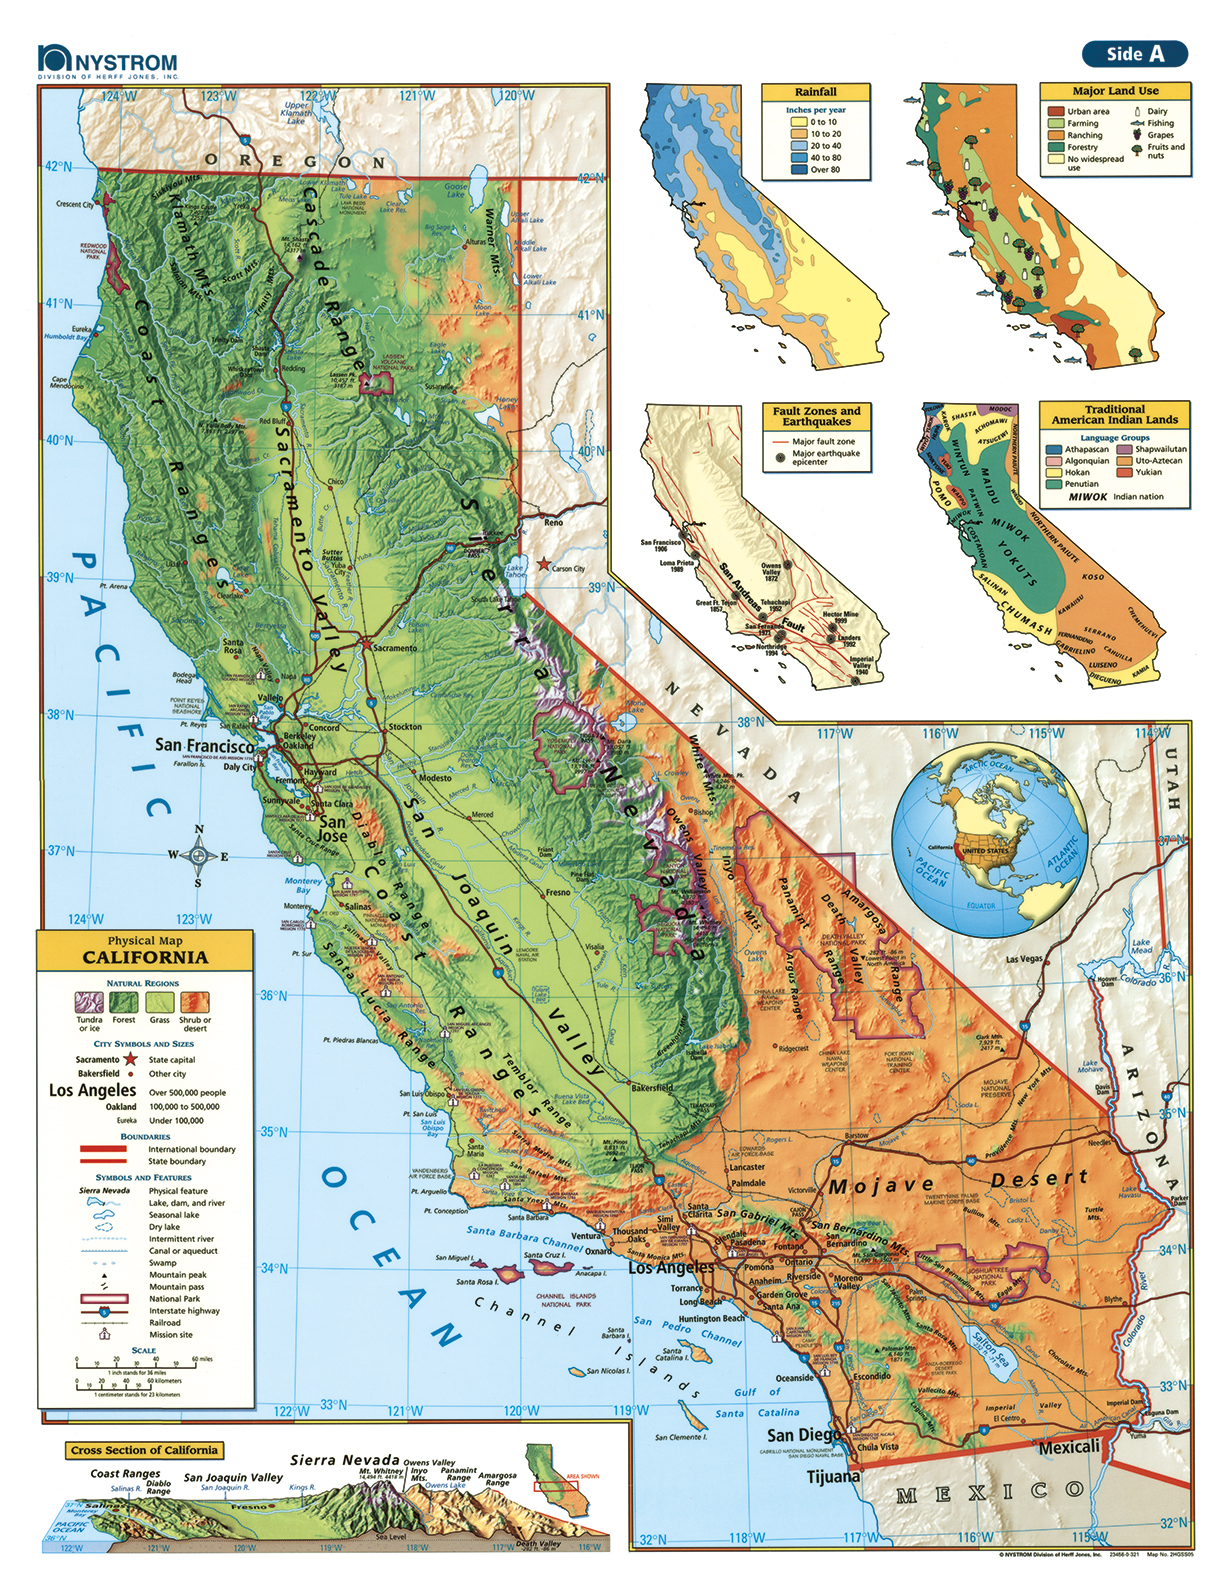 CALIFORNIA DESK MAP